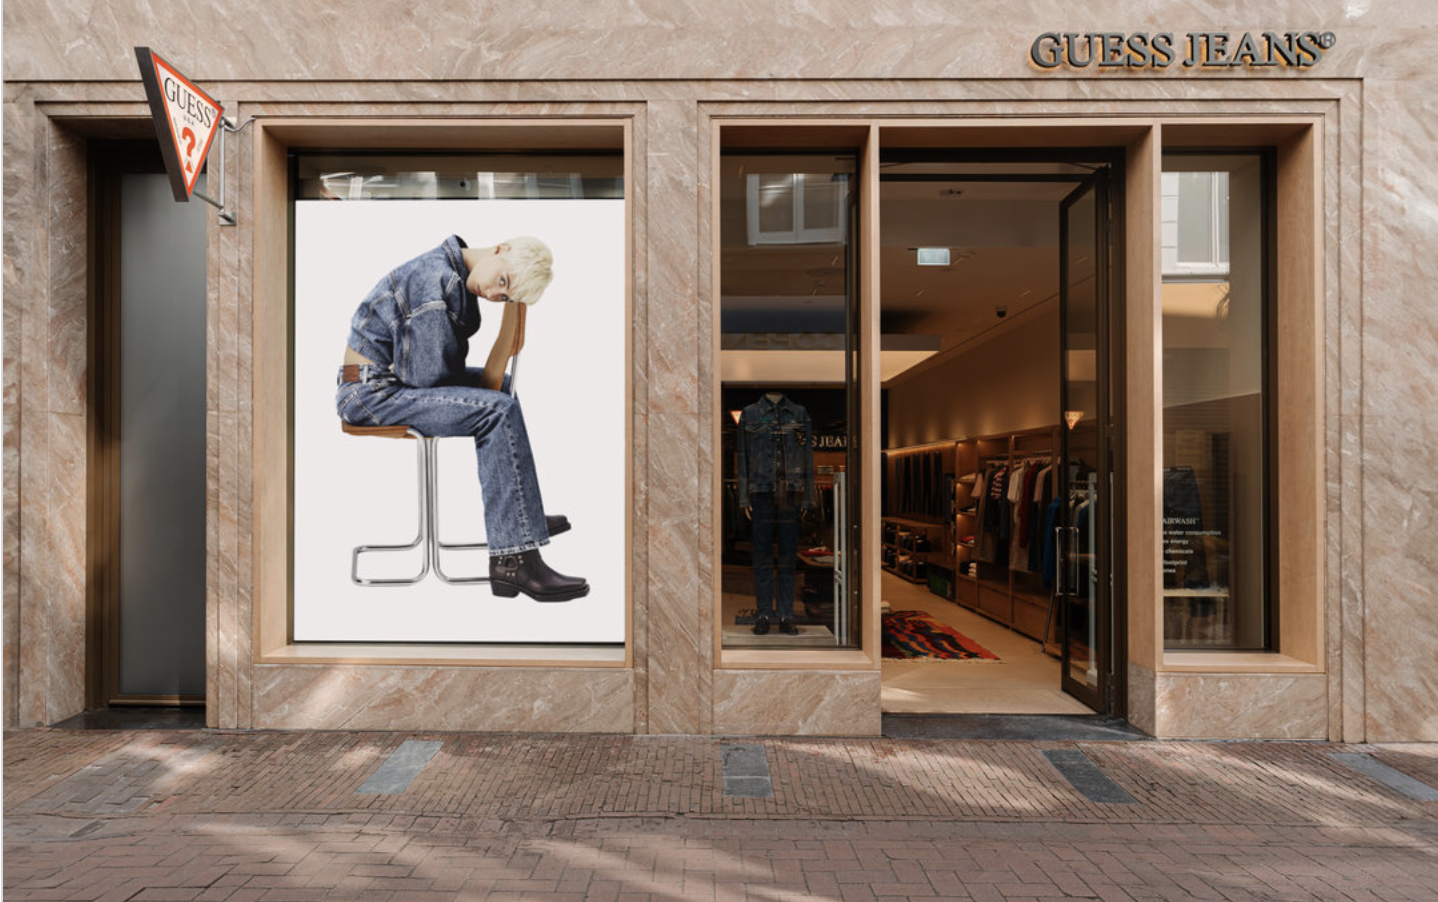  GUESS JEANS opent allereerste winkel wereldwijd in Amsterdam